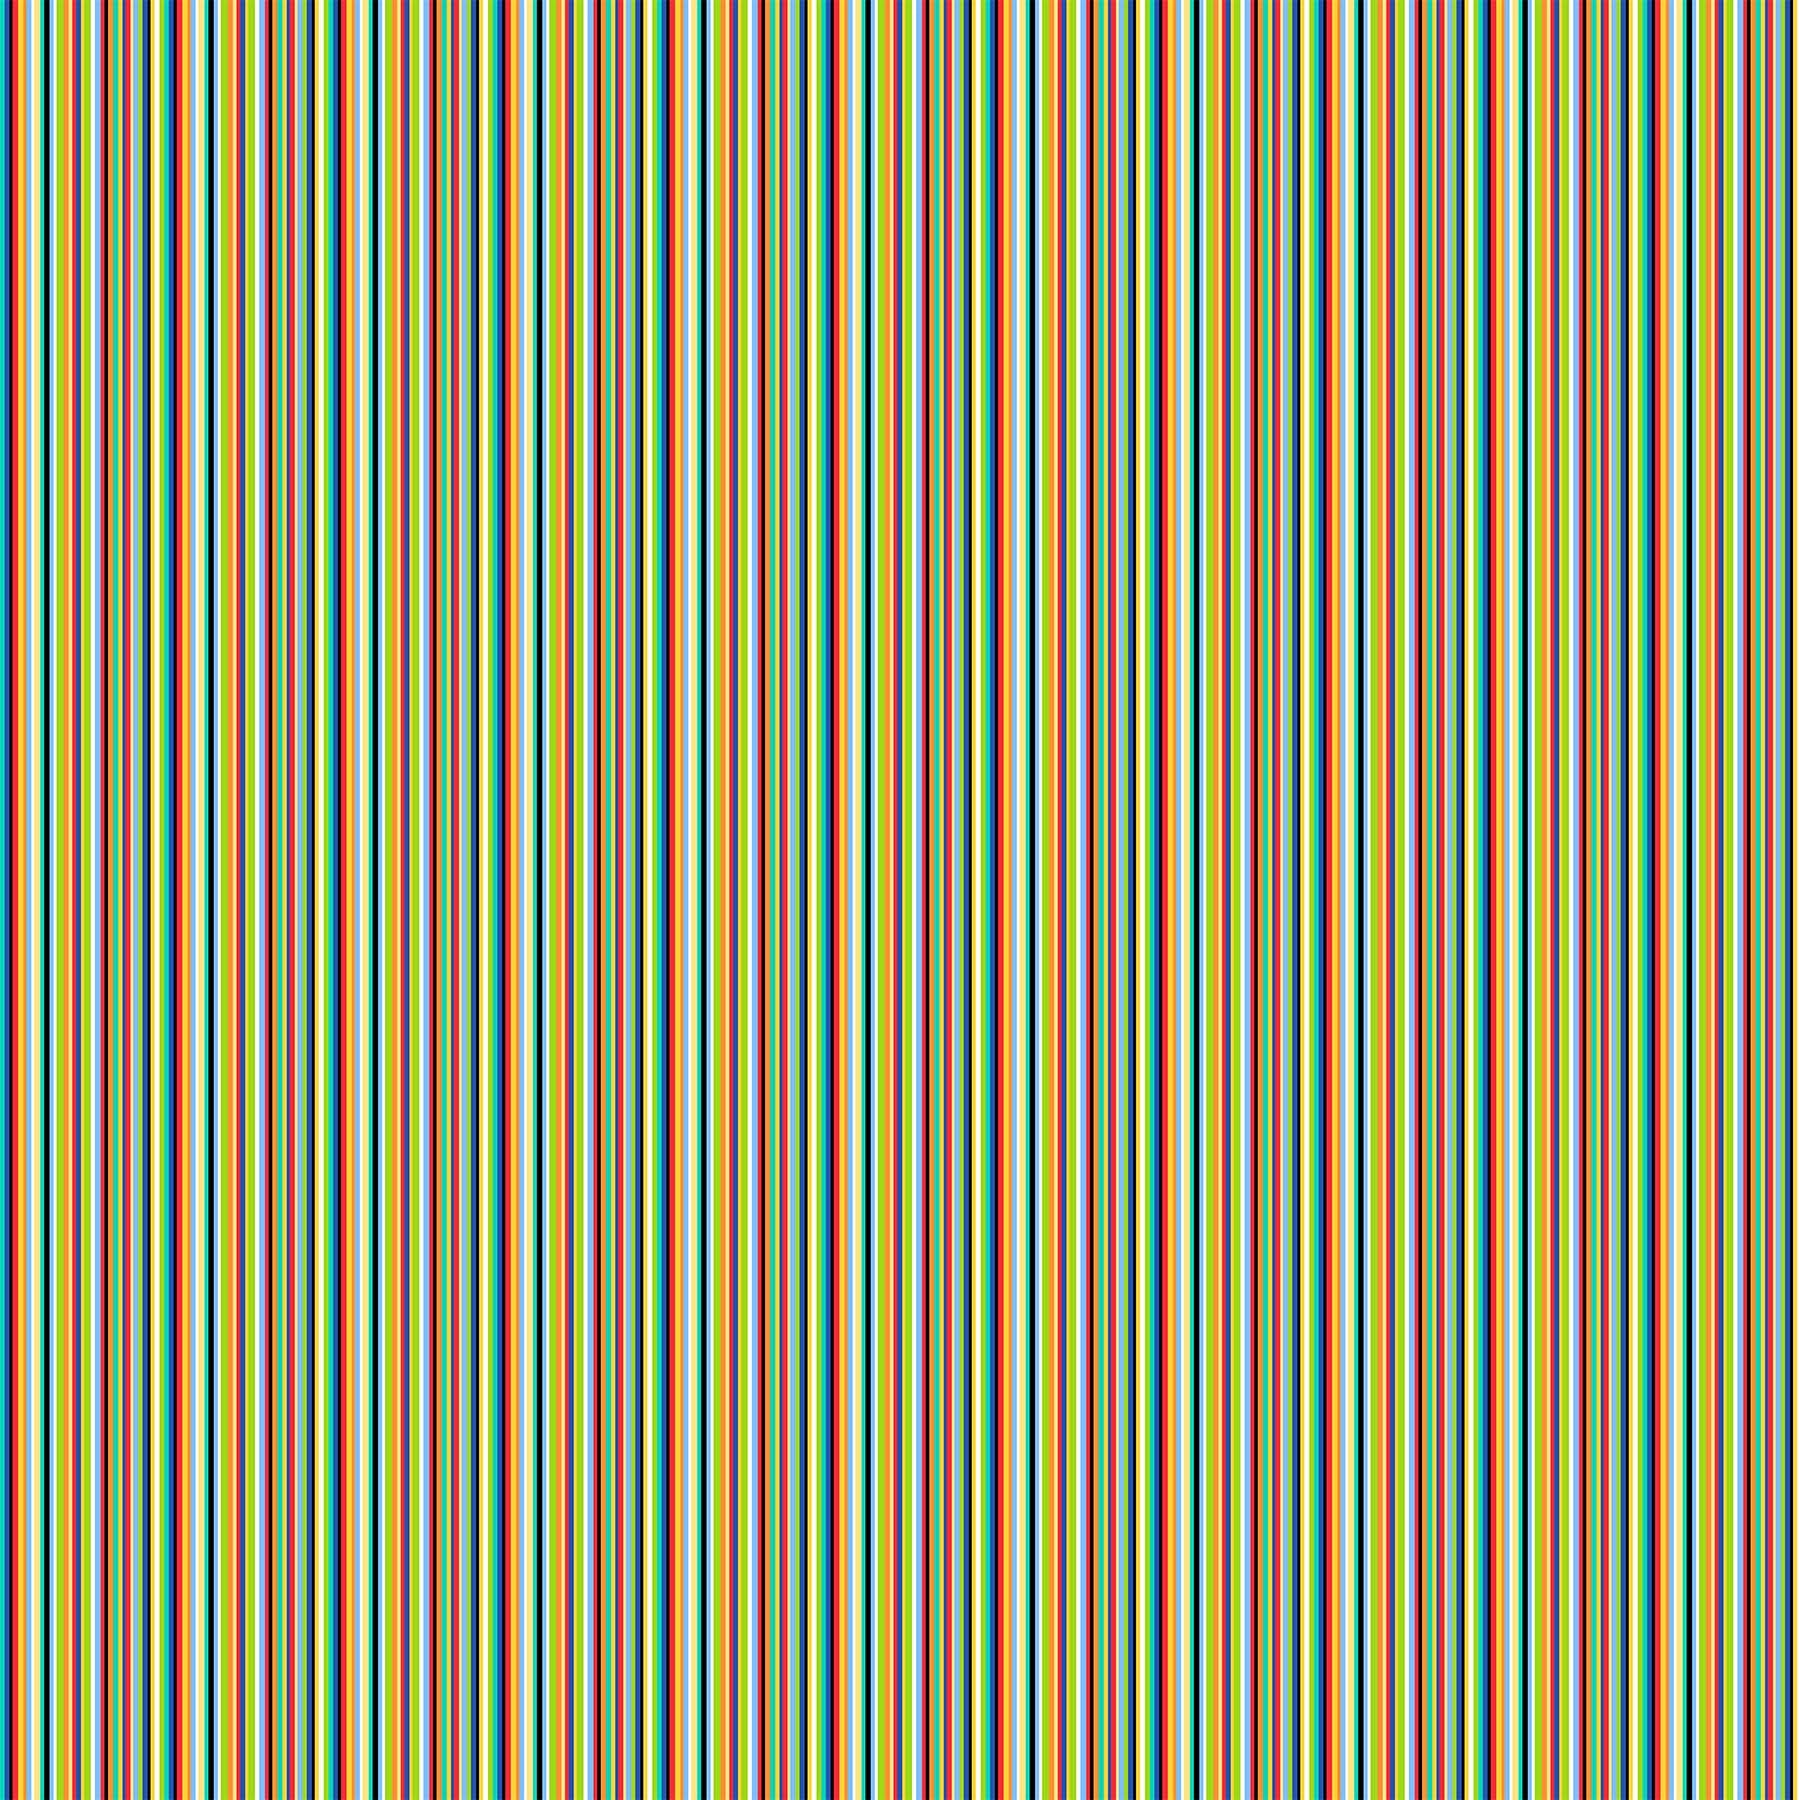 ABC 123 Quilt Fabric - Stripes in White/Multi - 24954-10